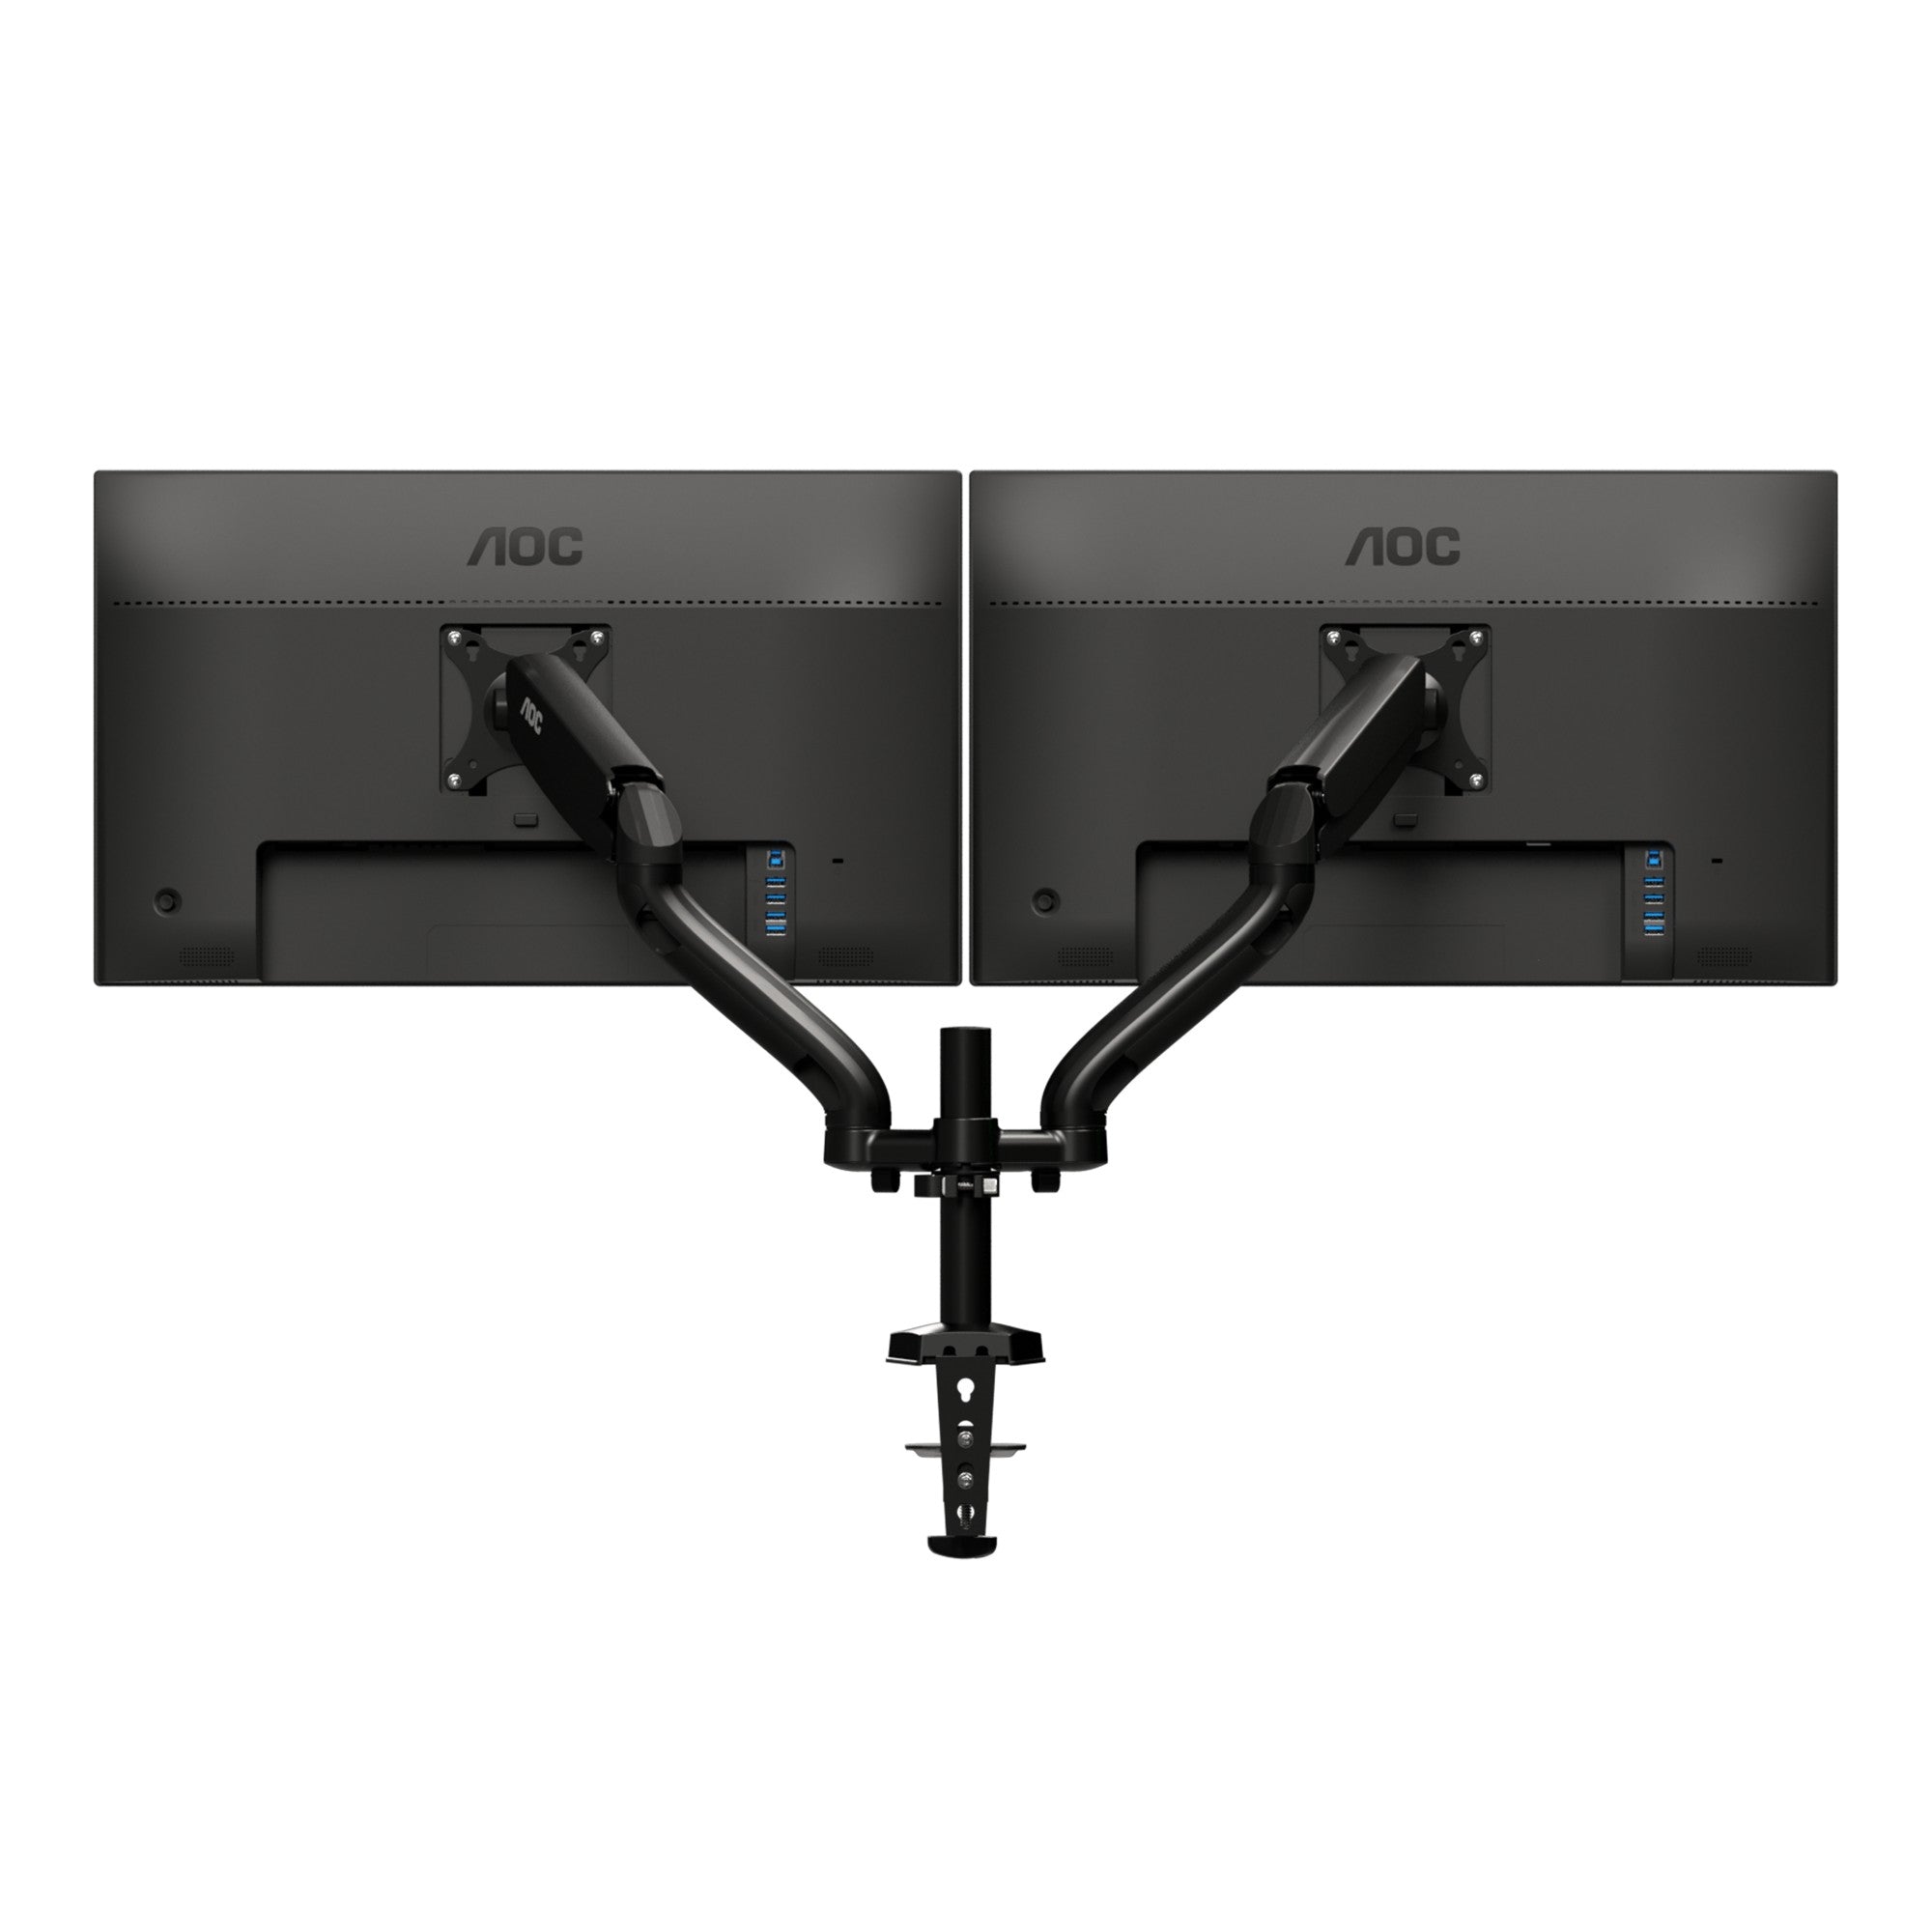 AOC AD110D0 monitor mount / stand 81.3 cm (32") Black Desk